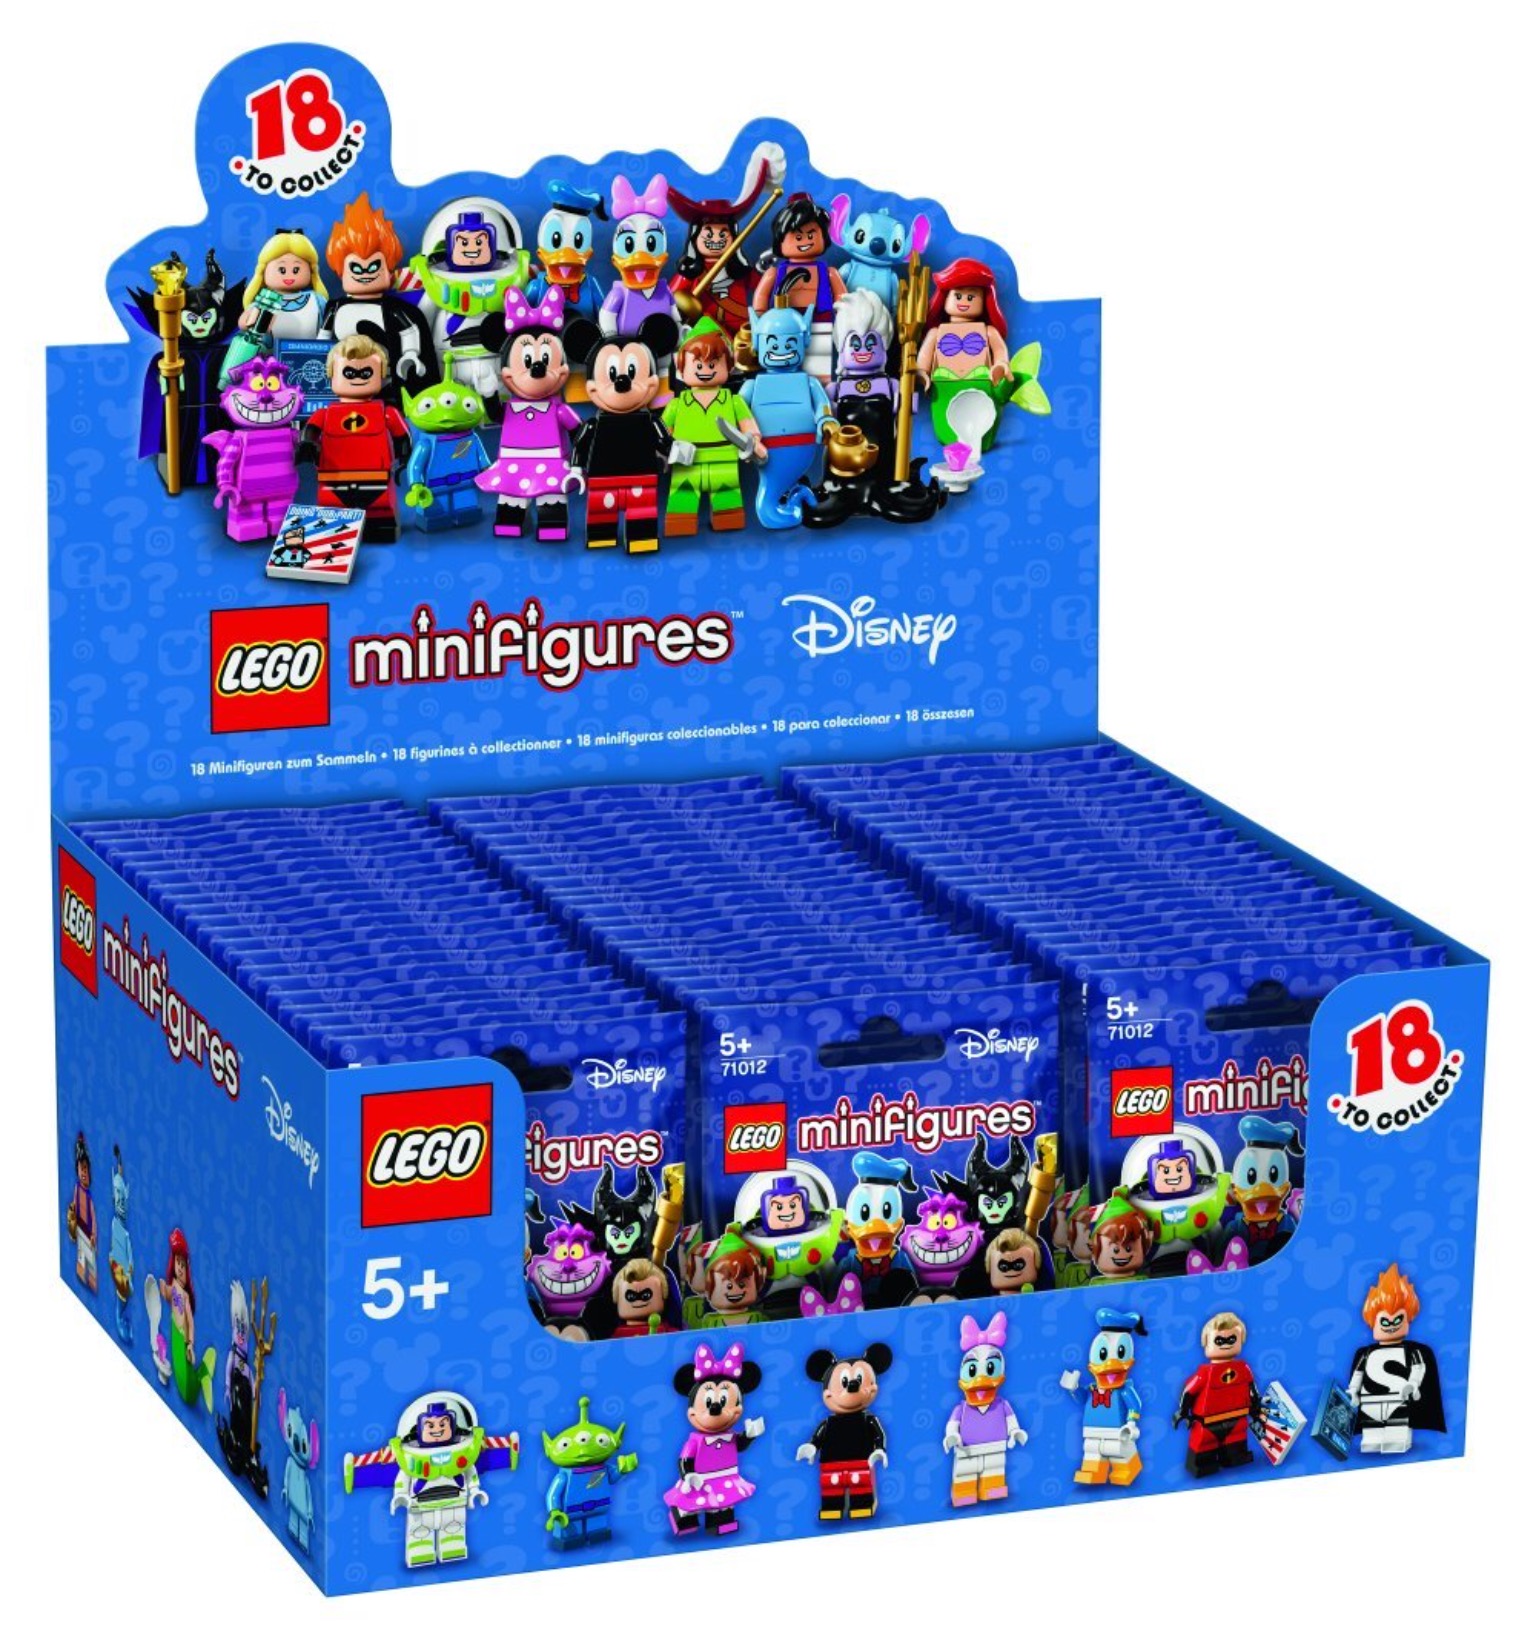 Lego 71012 Disney Series 1 Minifigure Alien Ships Fast 